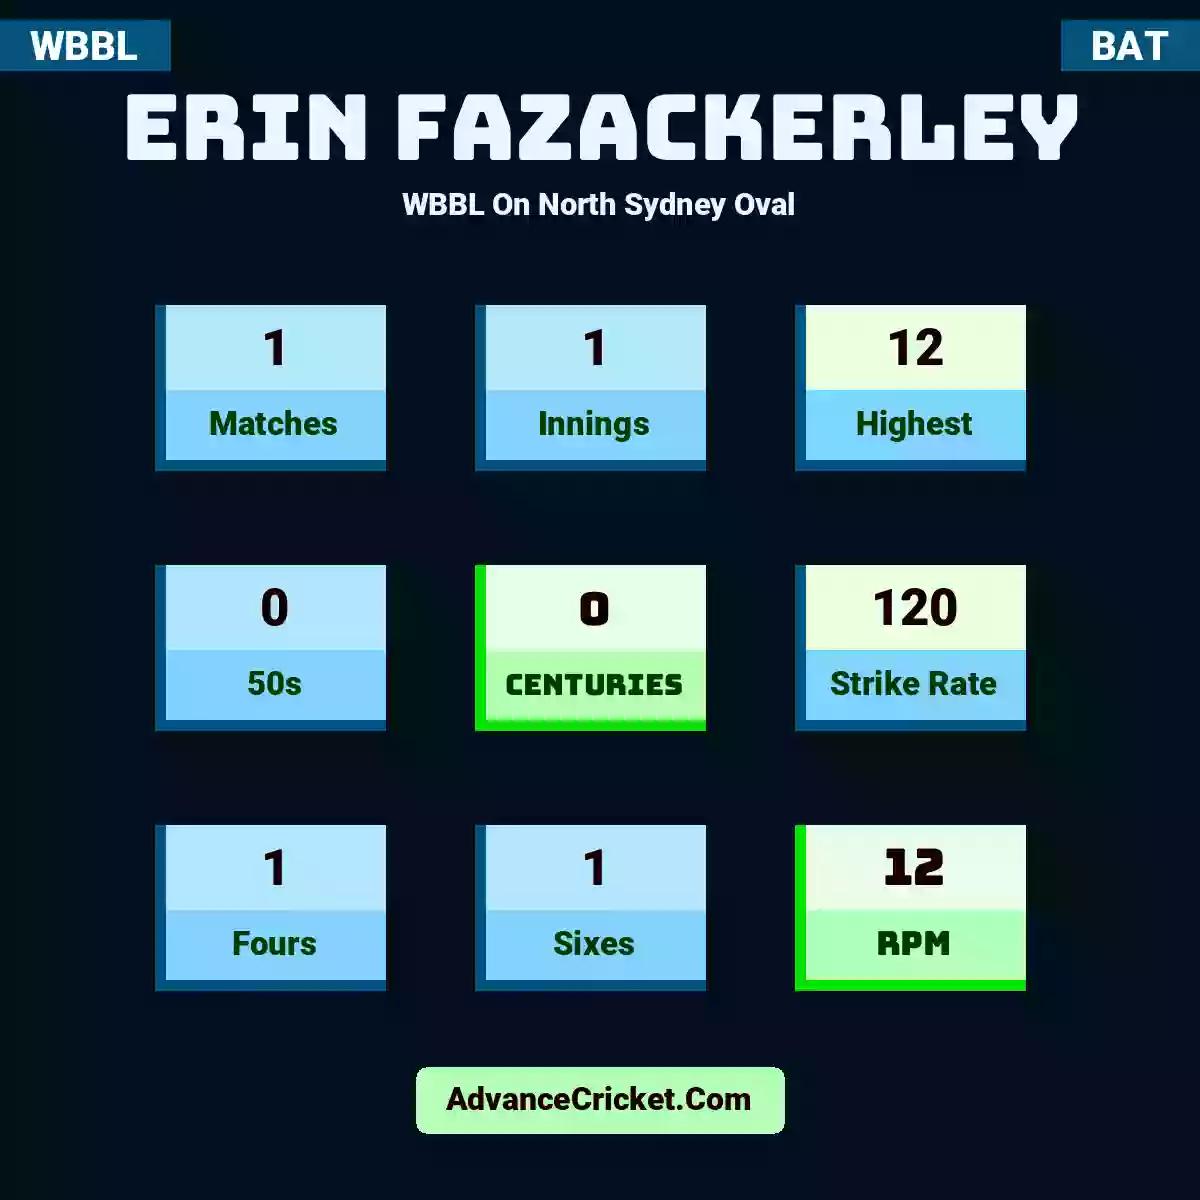 Erin Fazackerley WBBL  On North Sydney Oval, Erin Fazackerley played 1 matches, scored 12 runs as highest, 0 half-centuries, and 0 centuries, with a strike rate of 120. E.Fazackerley hit 1 fours and 1 sixes, with an RPM of 12.